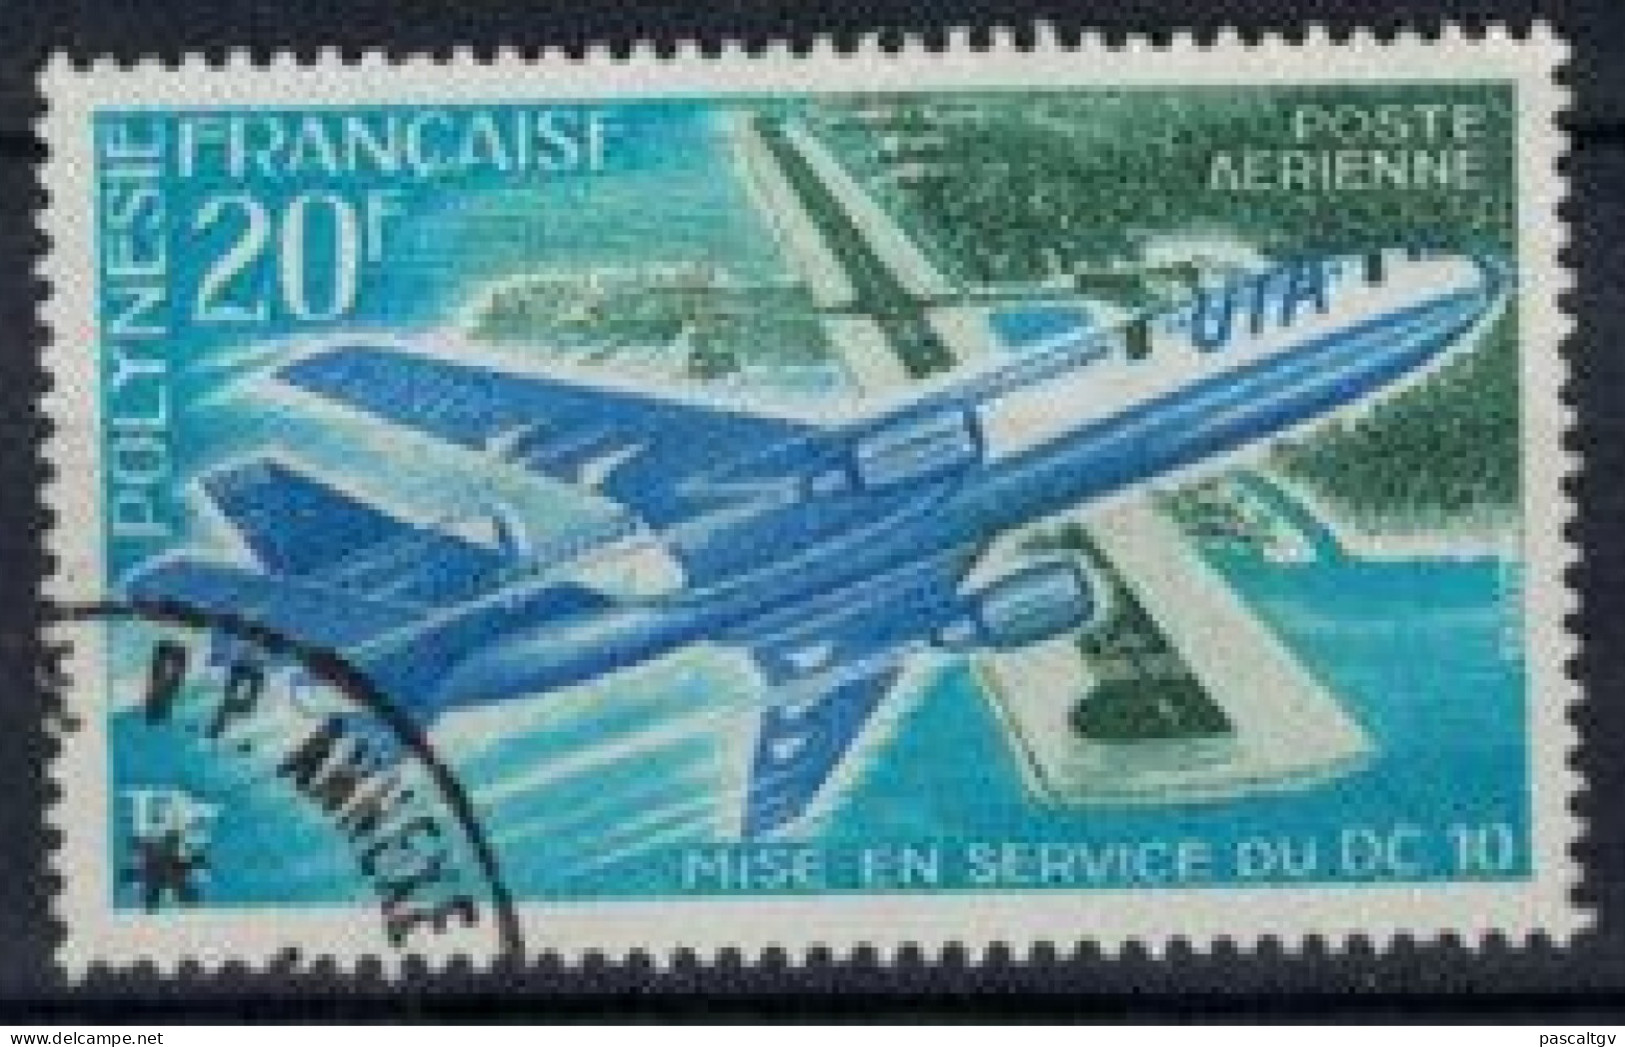 Polynésie Française - 1973 - PA N° 74 Oblitéré - Oblitérés